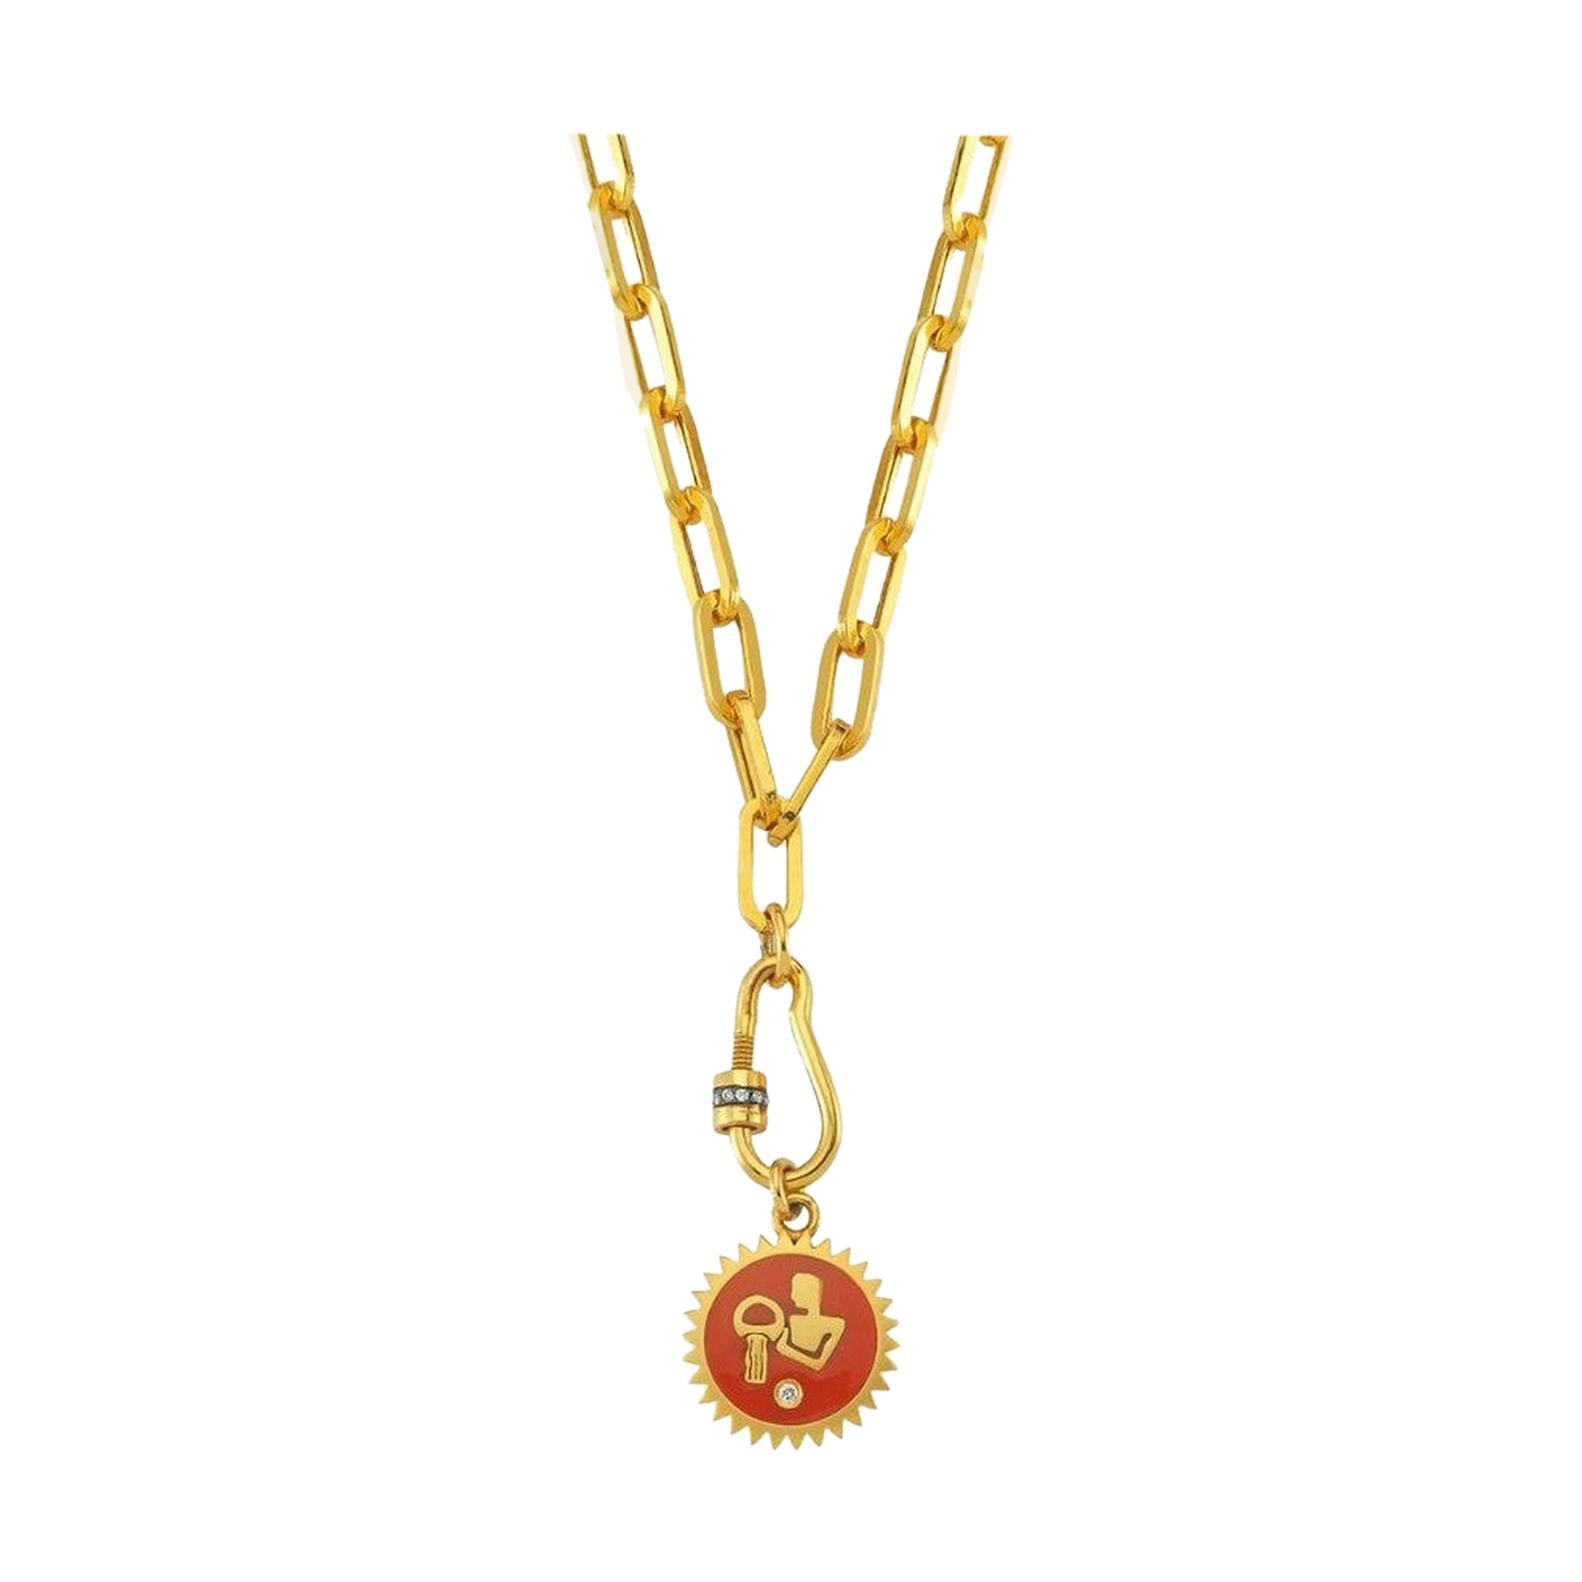 Aquarius Thick Chain Necklace with Light Coral Enamel & White Diamond